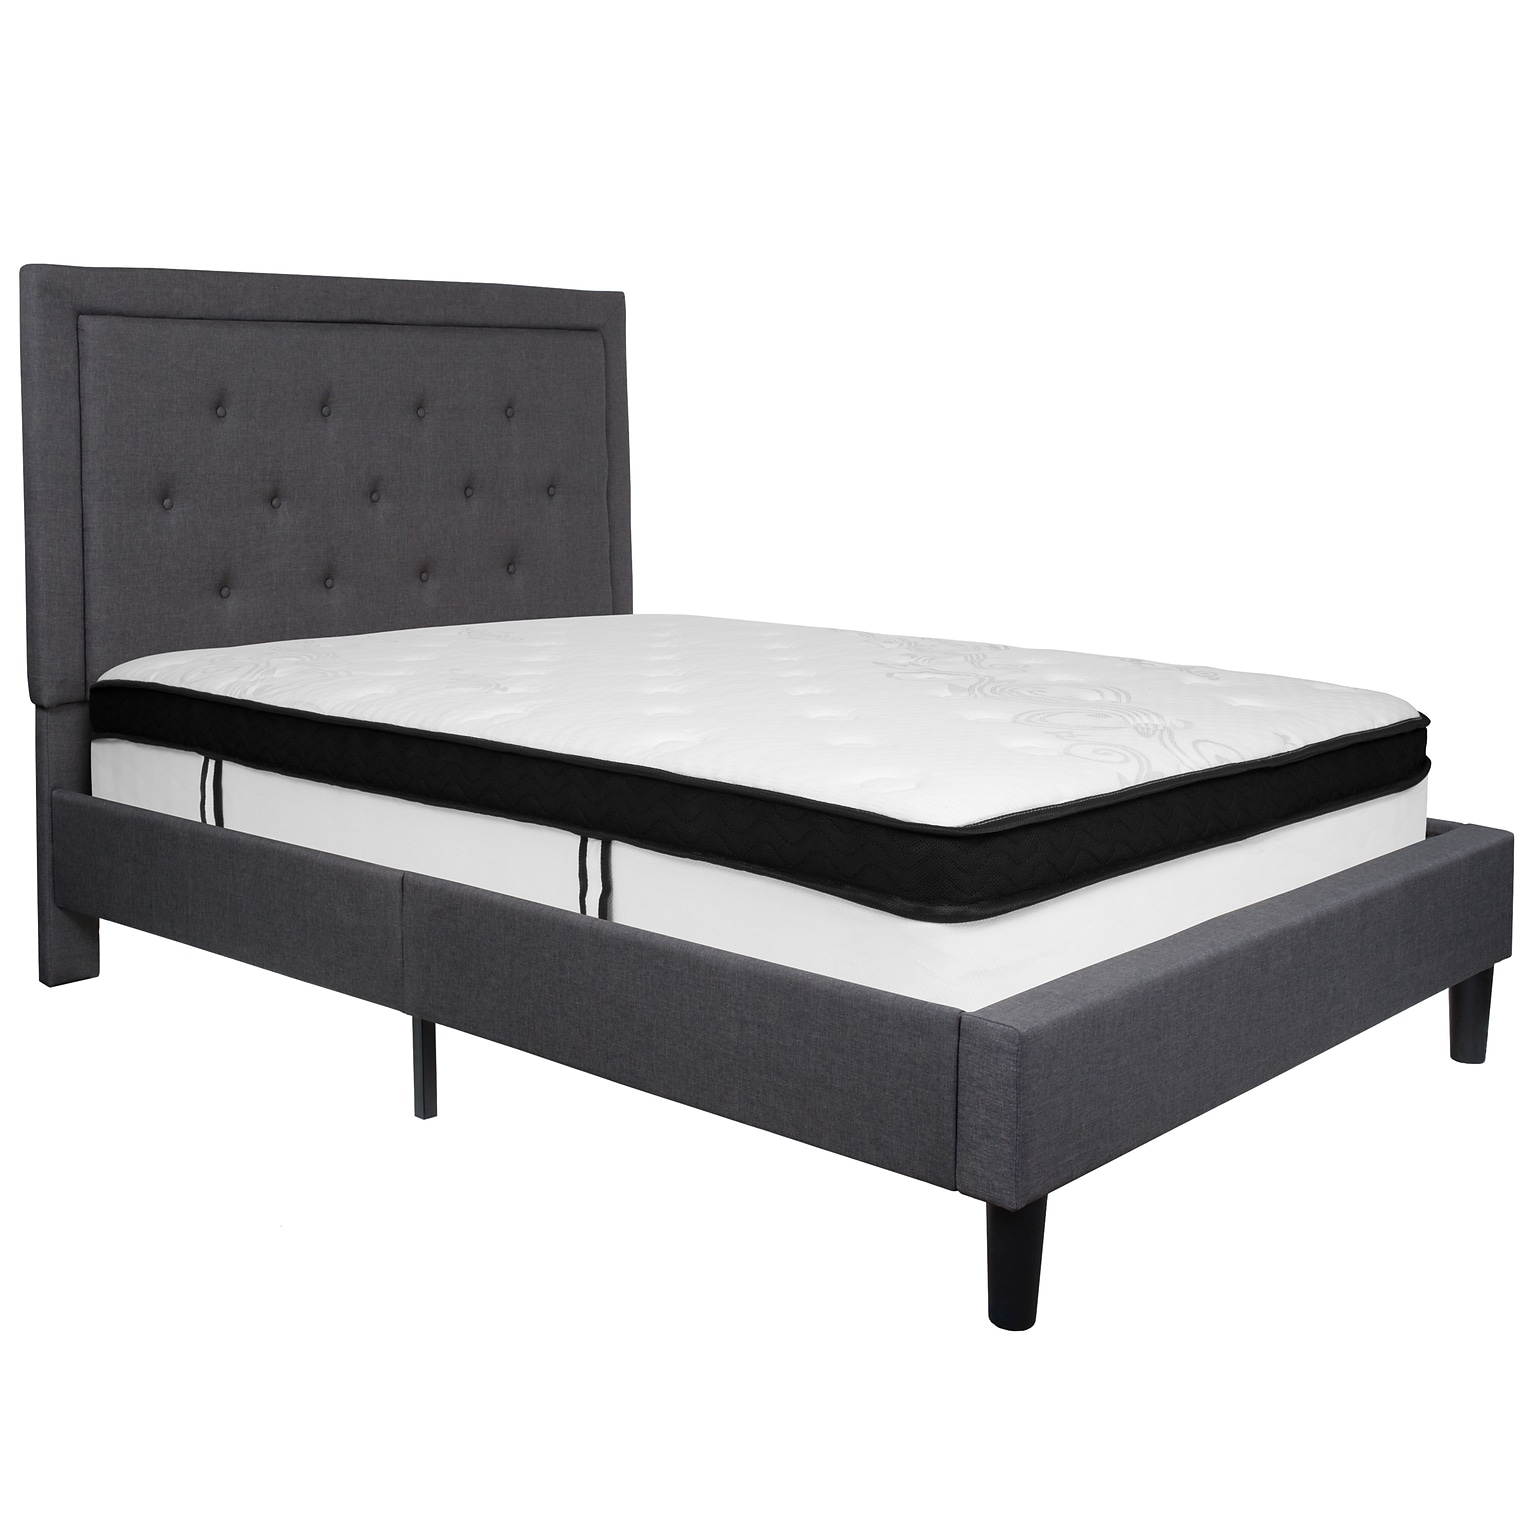 Flash Furniture Roxbury Tufted Upholstered Platform Bed in Dark Gray Fabric with Memory Foam Mattress, Full (SLBMF30)